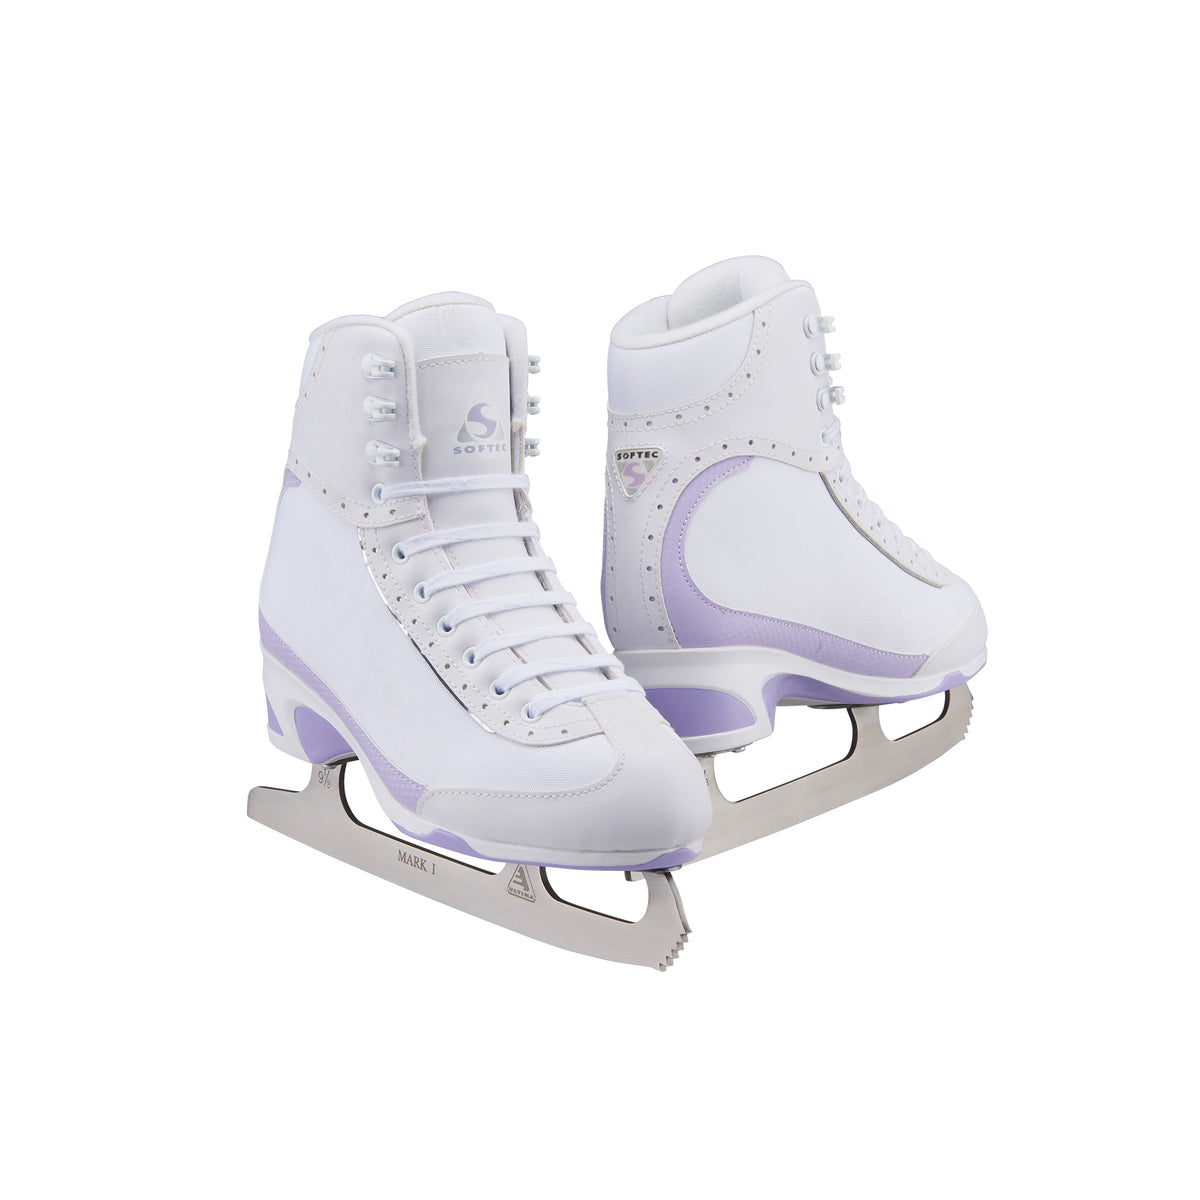 SKATE GURU Jackson Ultima Figure Ice Skates Softec for Women and Girls 